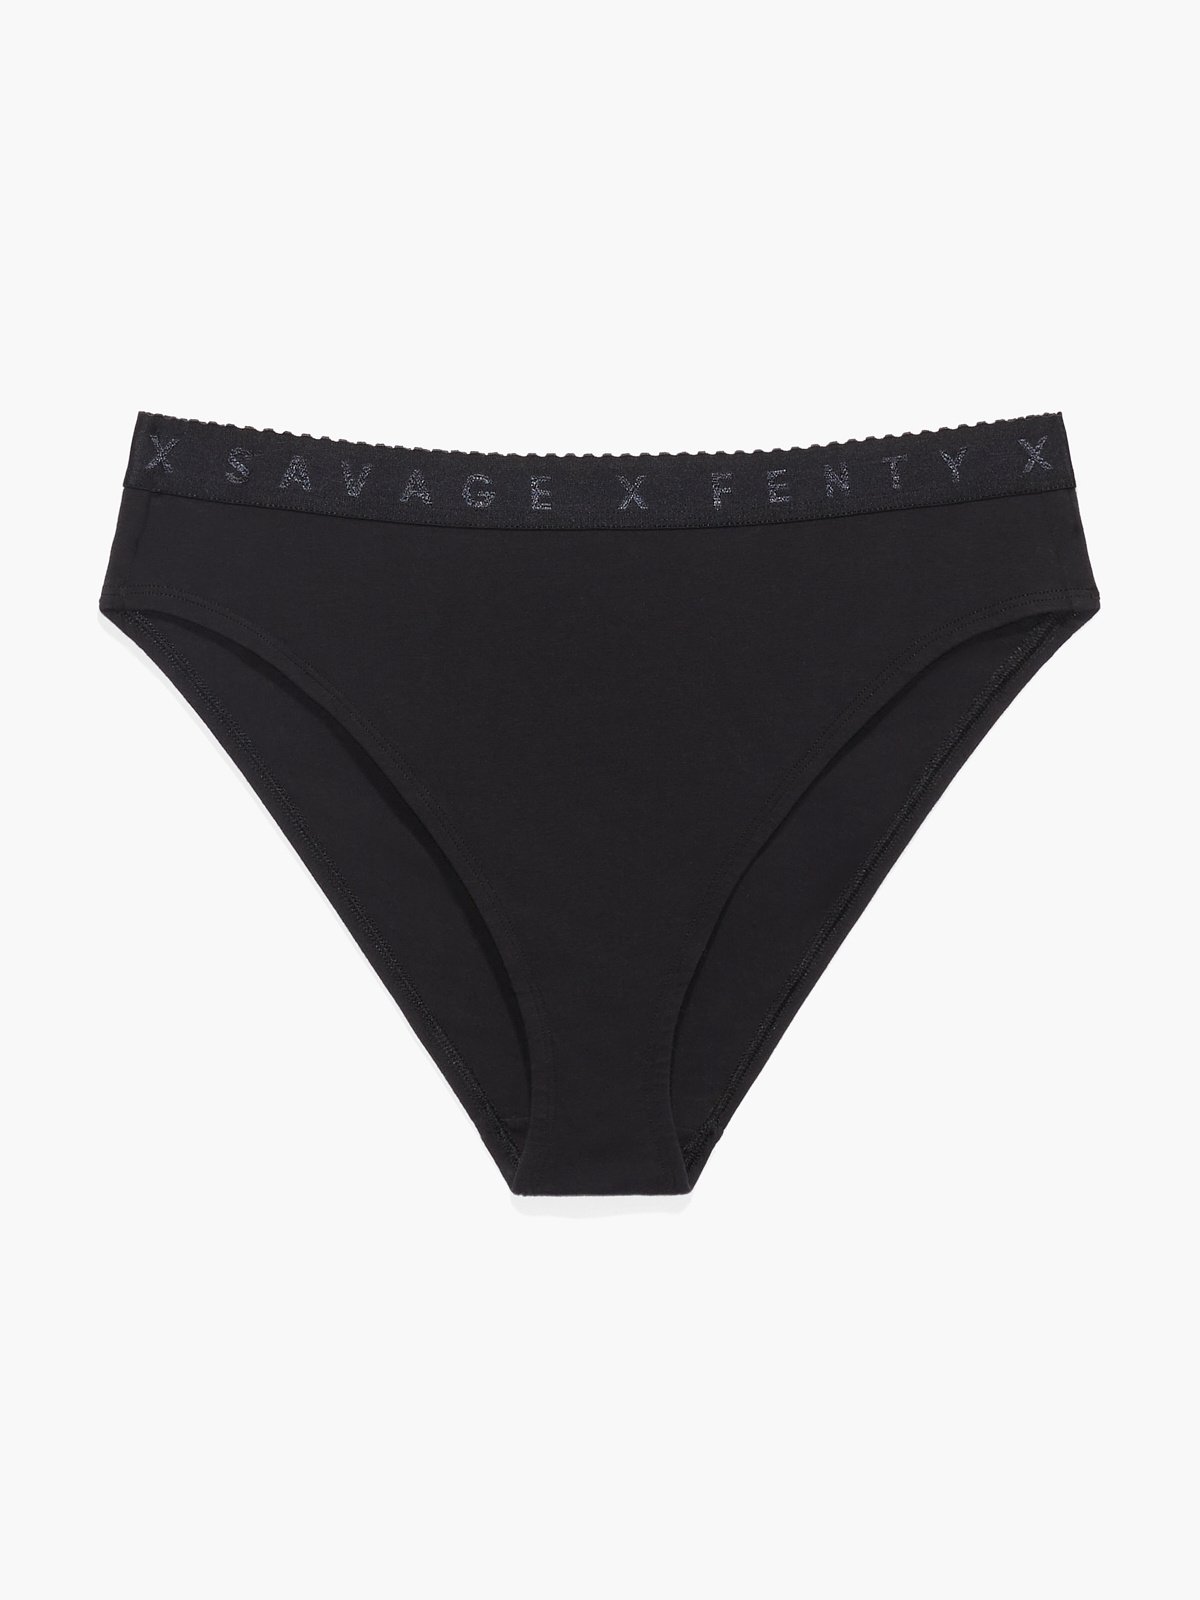 Shop 5 Pack of Champion Women's Print Bikini Underwear (Black